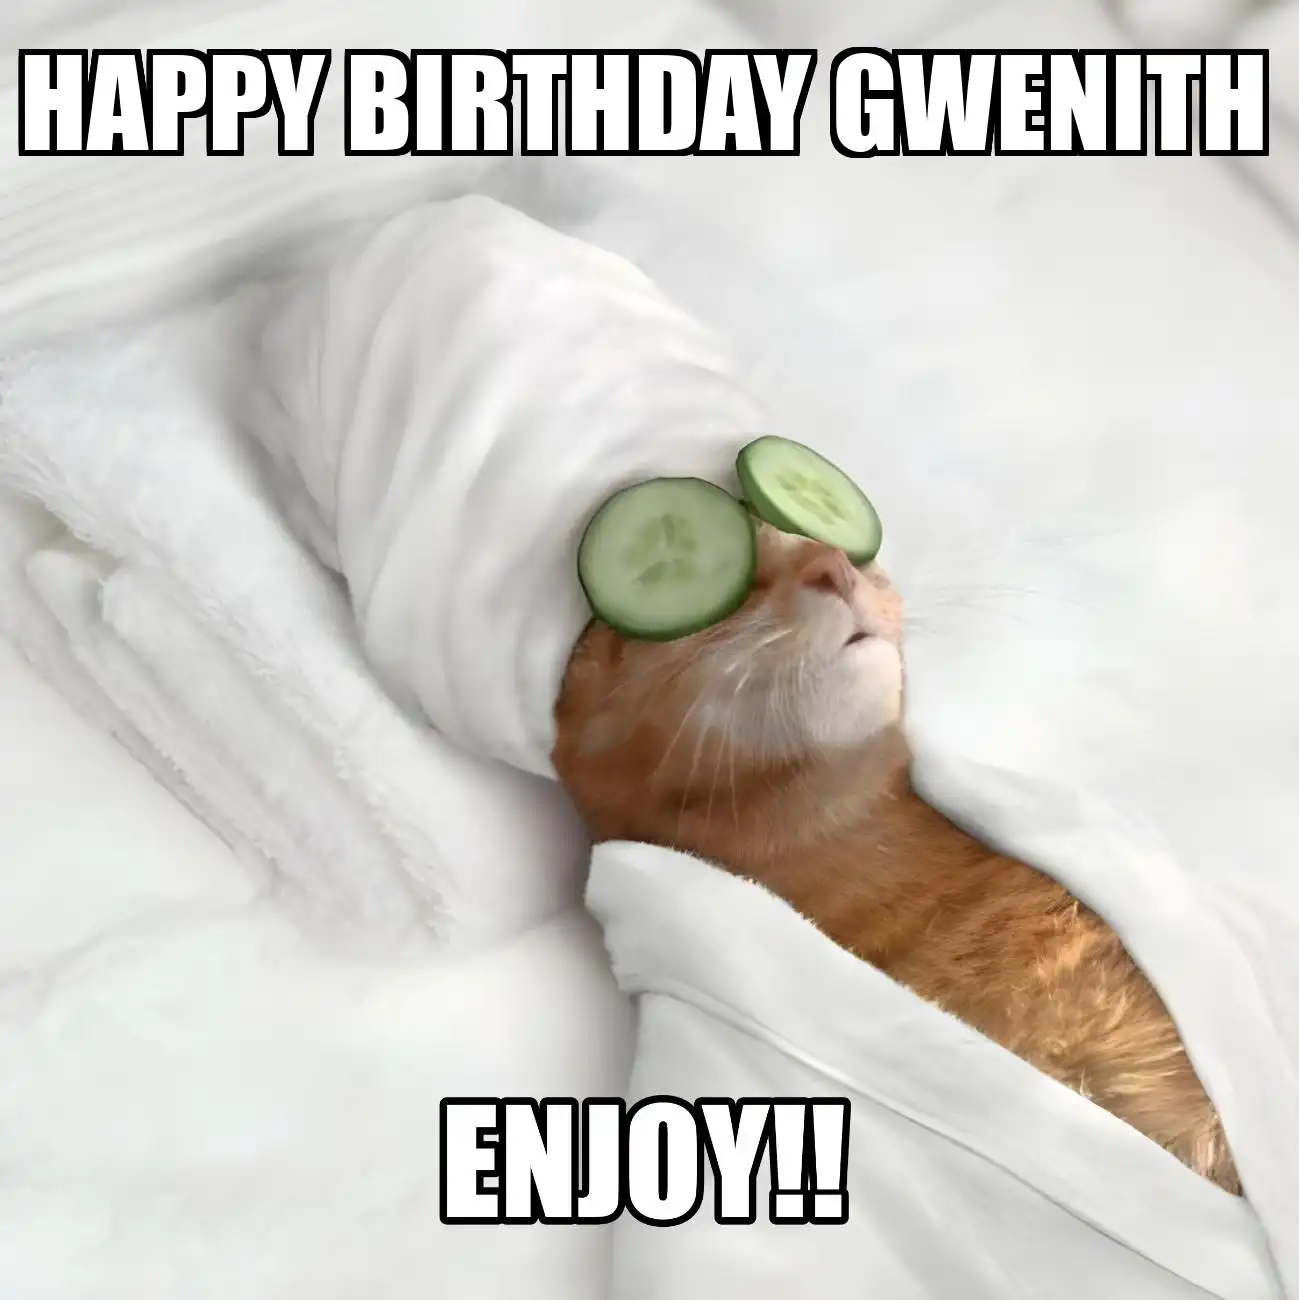 Happy Birthday Gwenith Enjoy Cat Meme